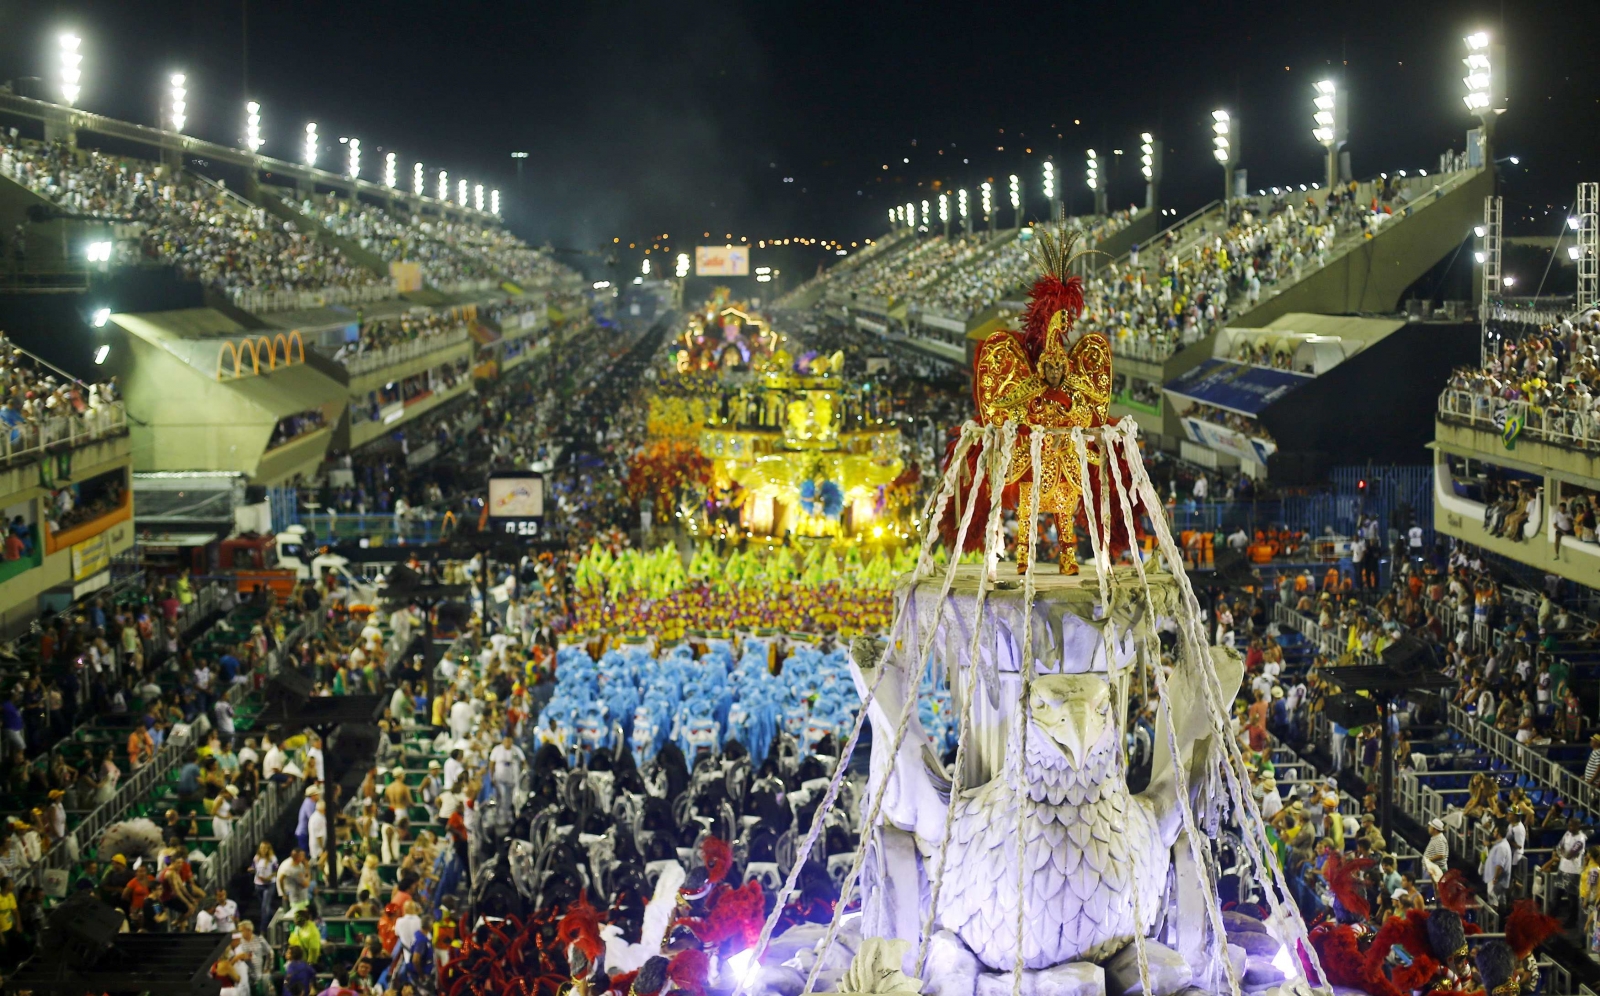 Rio Carnival 2015: Samba schools parade despite storms